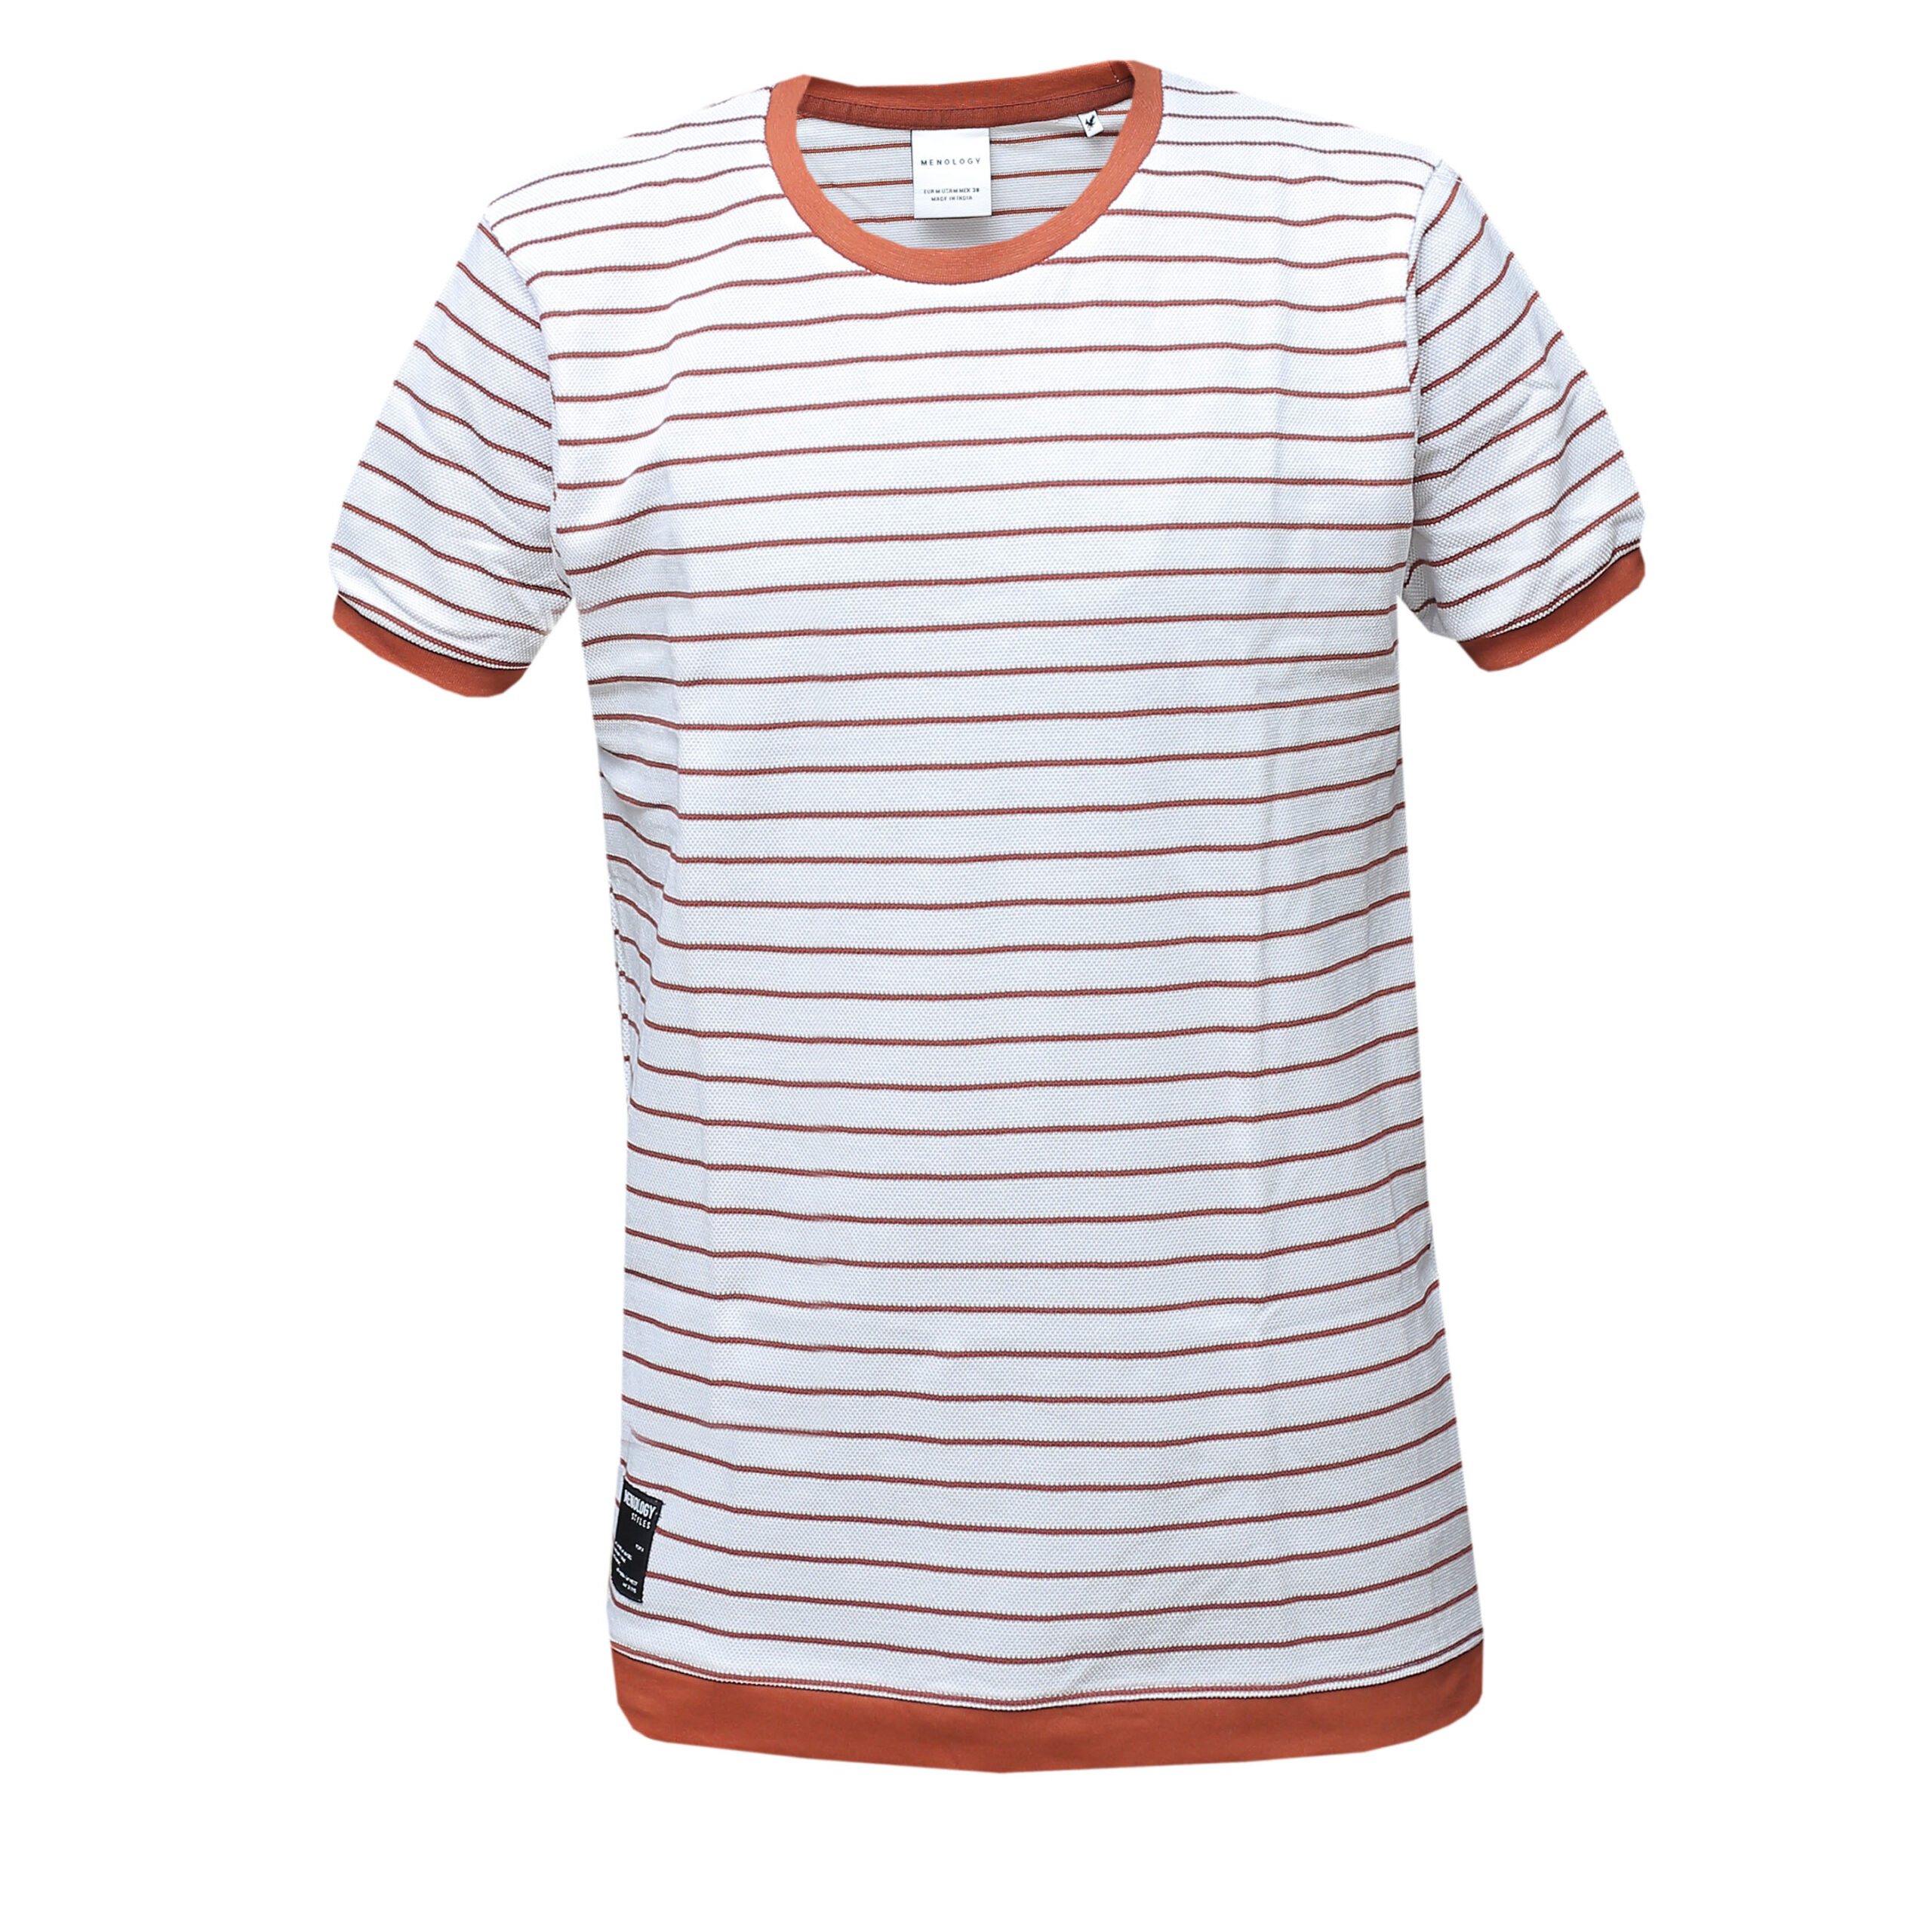 Men's striped T-Shirts. Casual Wear for Men